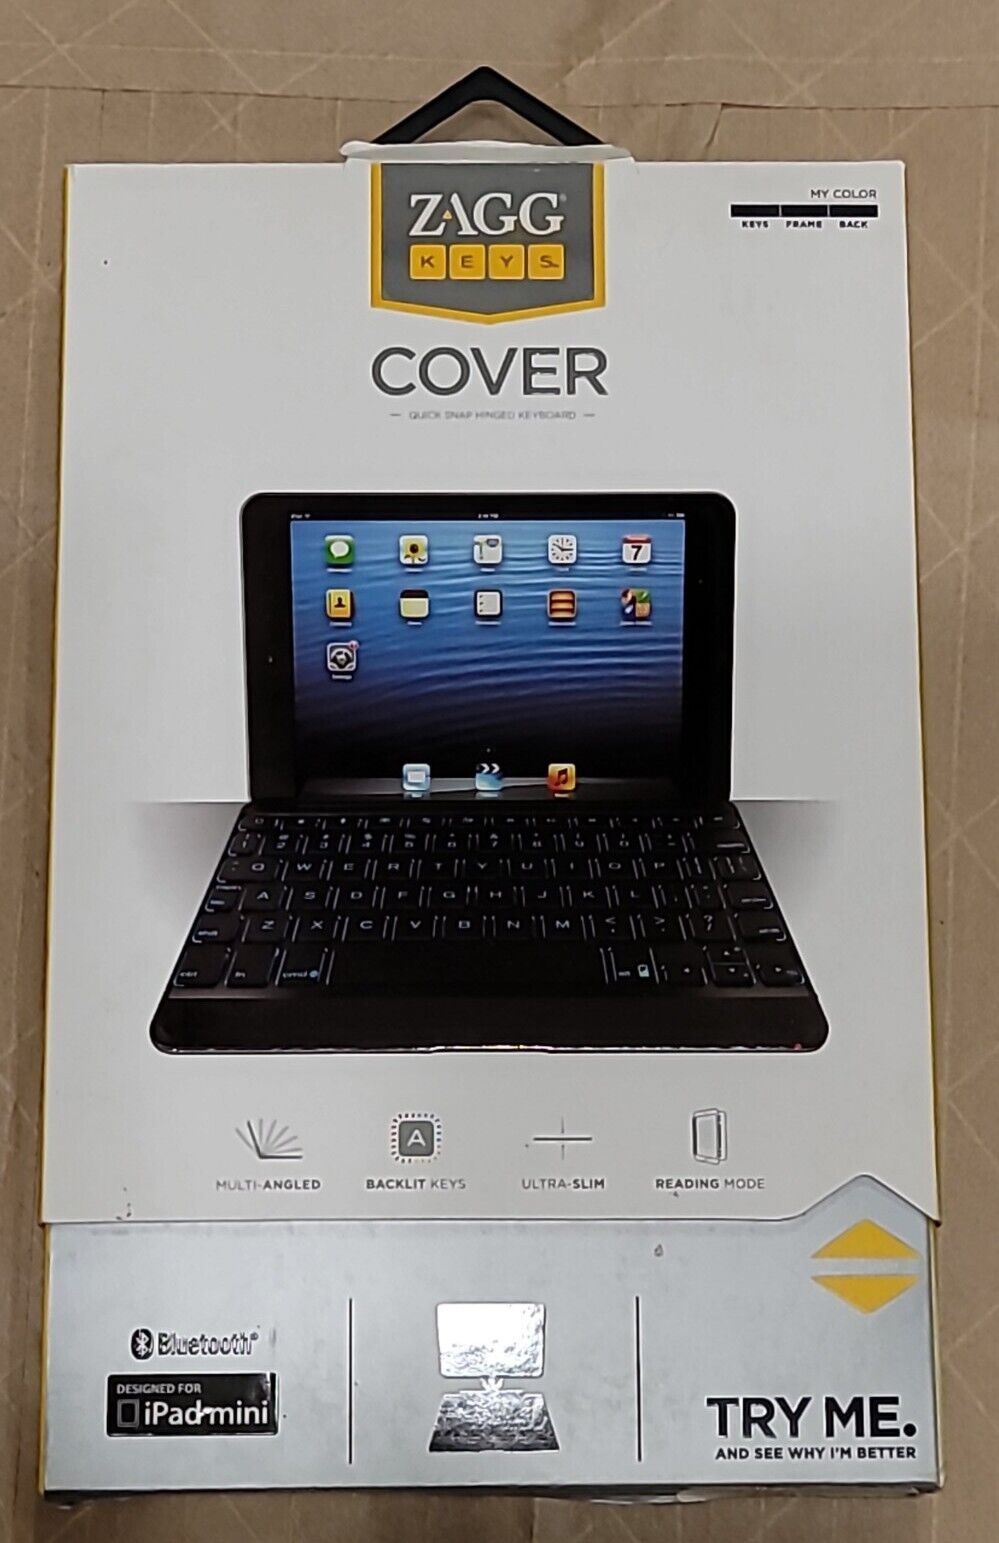 Zagg Keys iPad Mini 1, 2, 3 BLACK Full Keys Bluetooth Keyboard Case Stand Cover